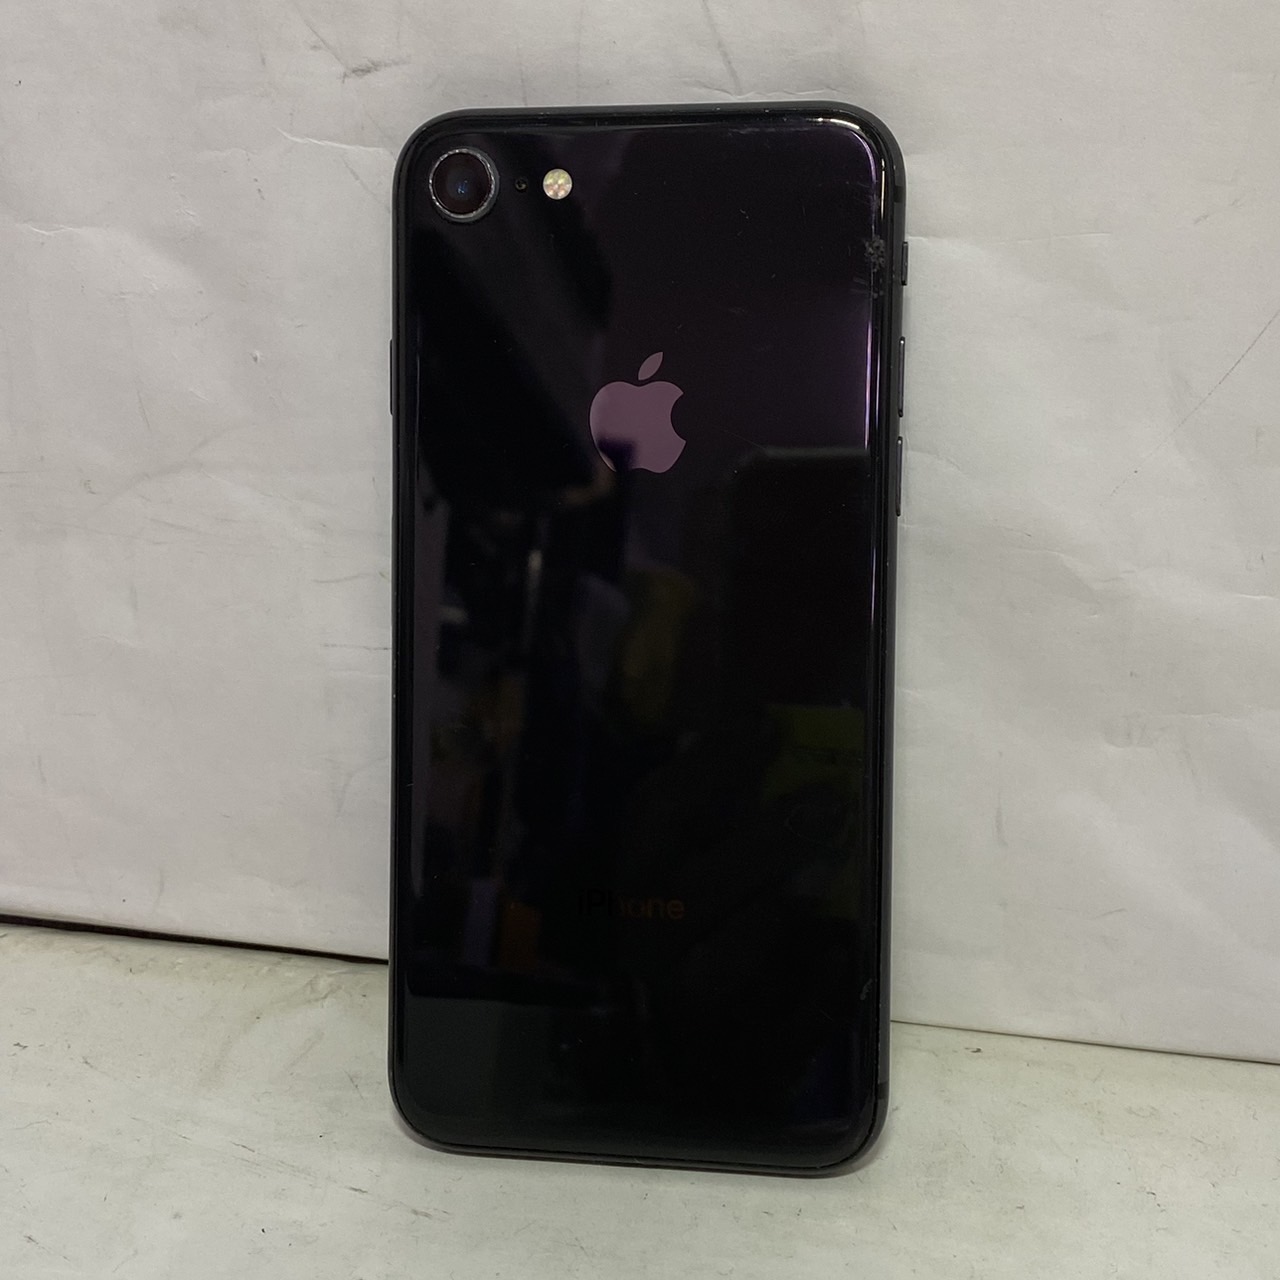 APPLE(アップル) iPhone 8 64GB SIMフリー [ブラック]の激安通販